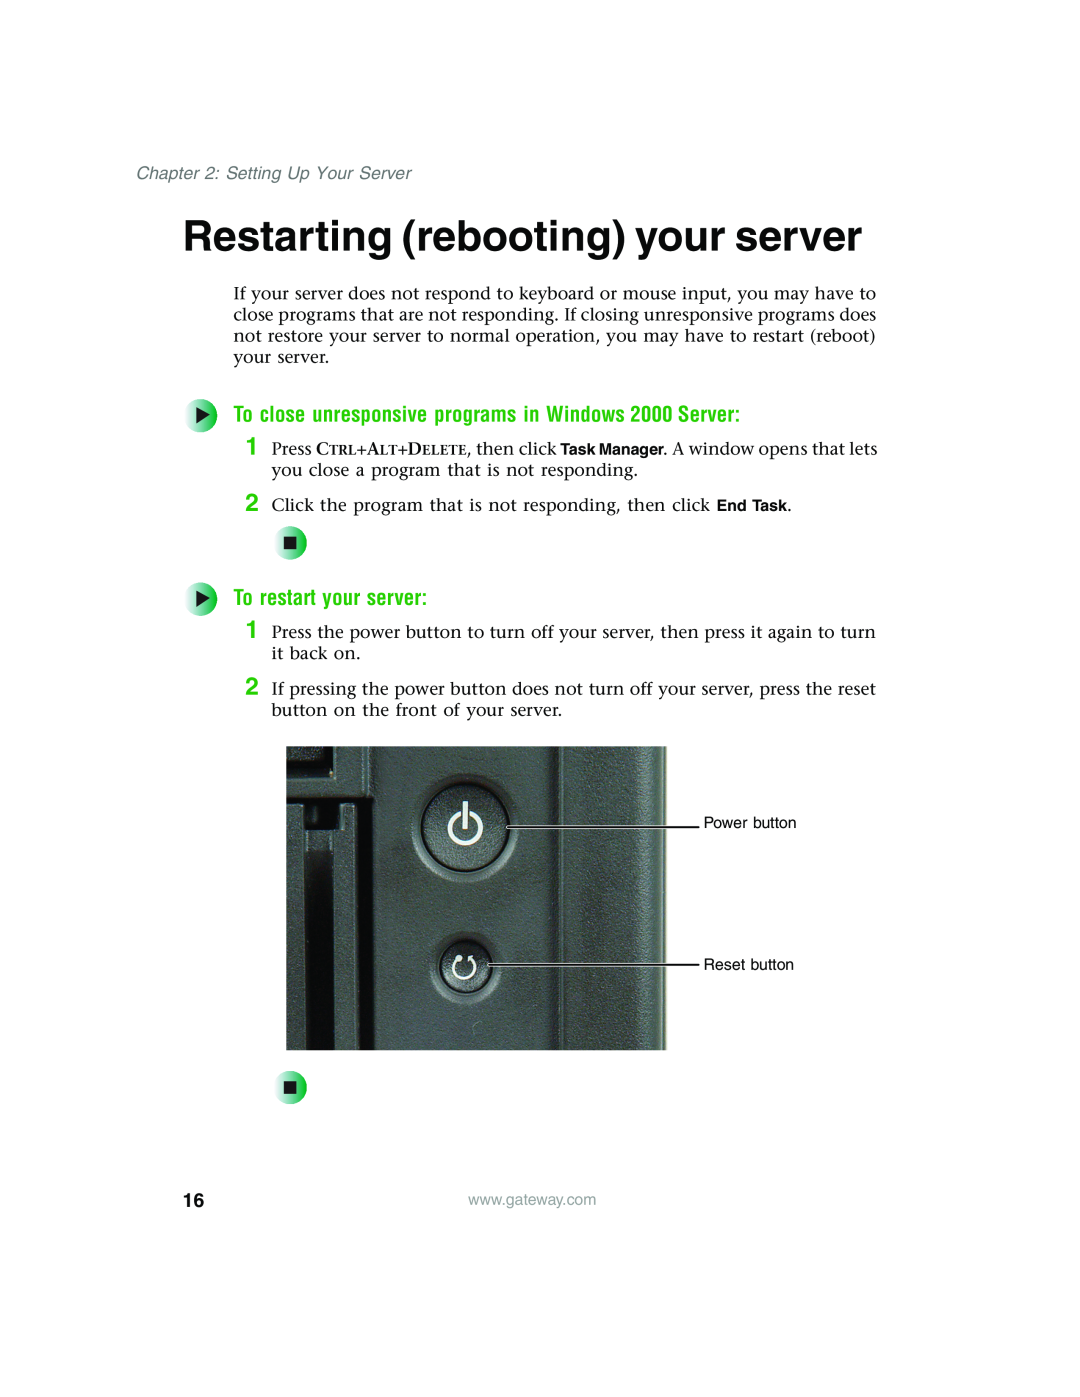 Gateway 960 manual Restarting rebooting your server, To close unresponsive programs in Windows 2000 Server 